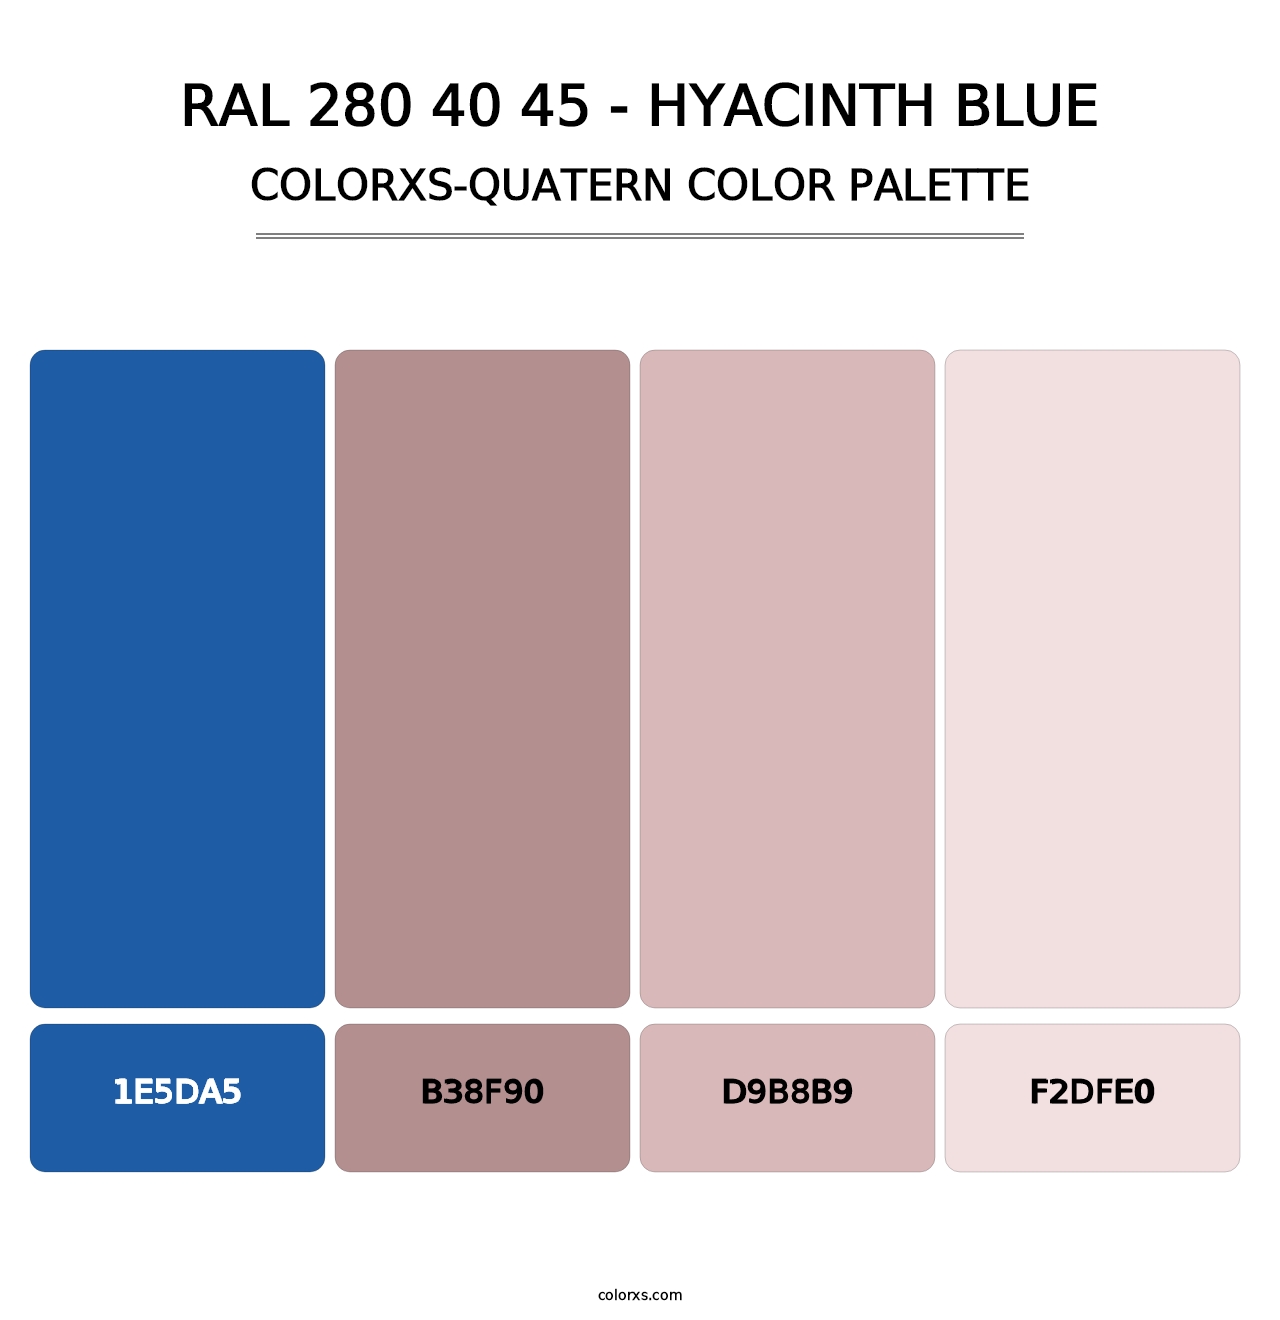 RAL 280 40 45 - Hyacinth Blue - Colorxs Quatern Palette